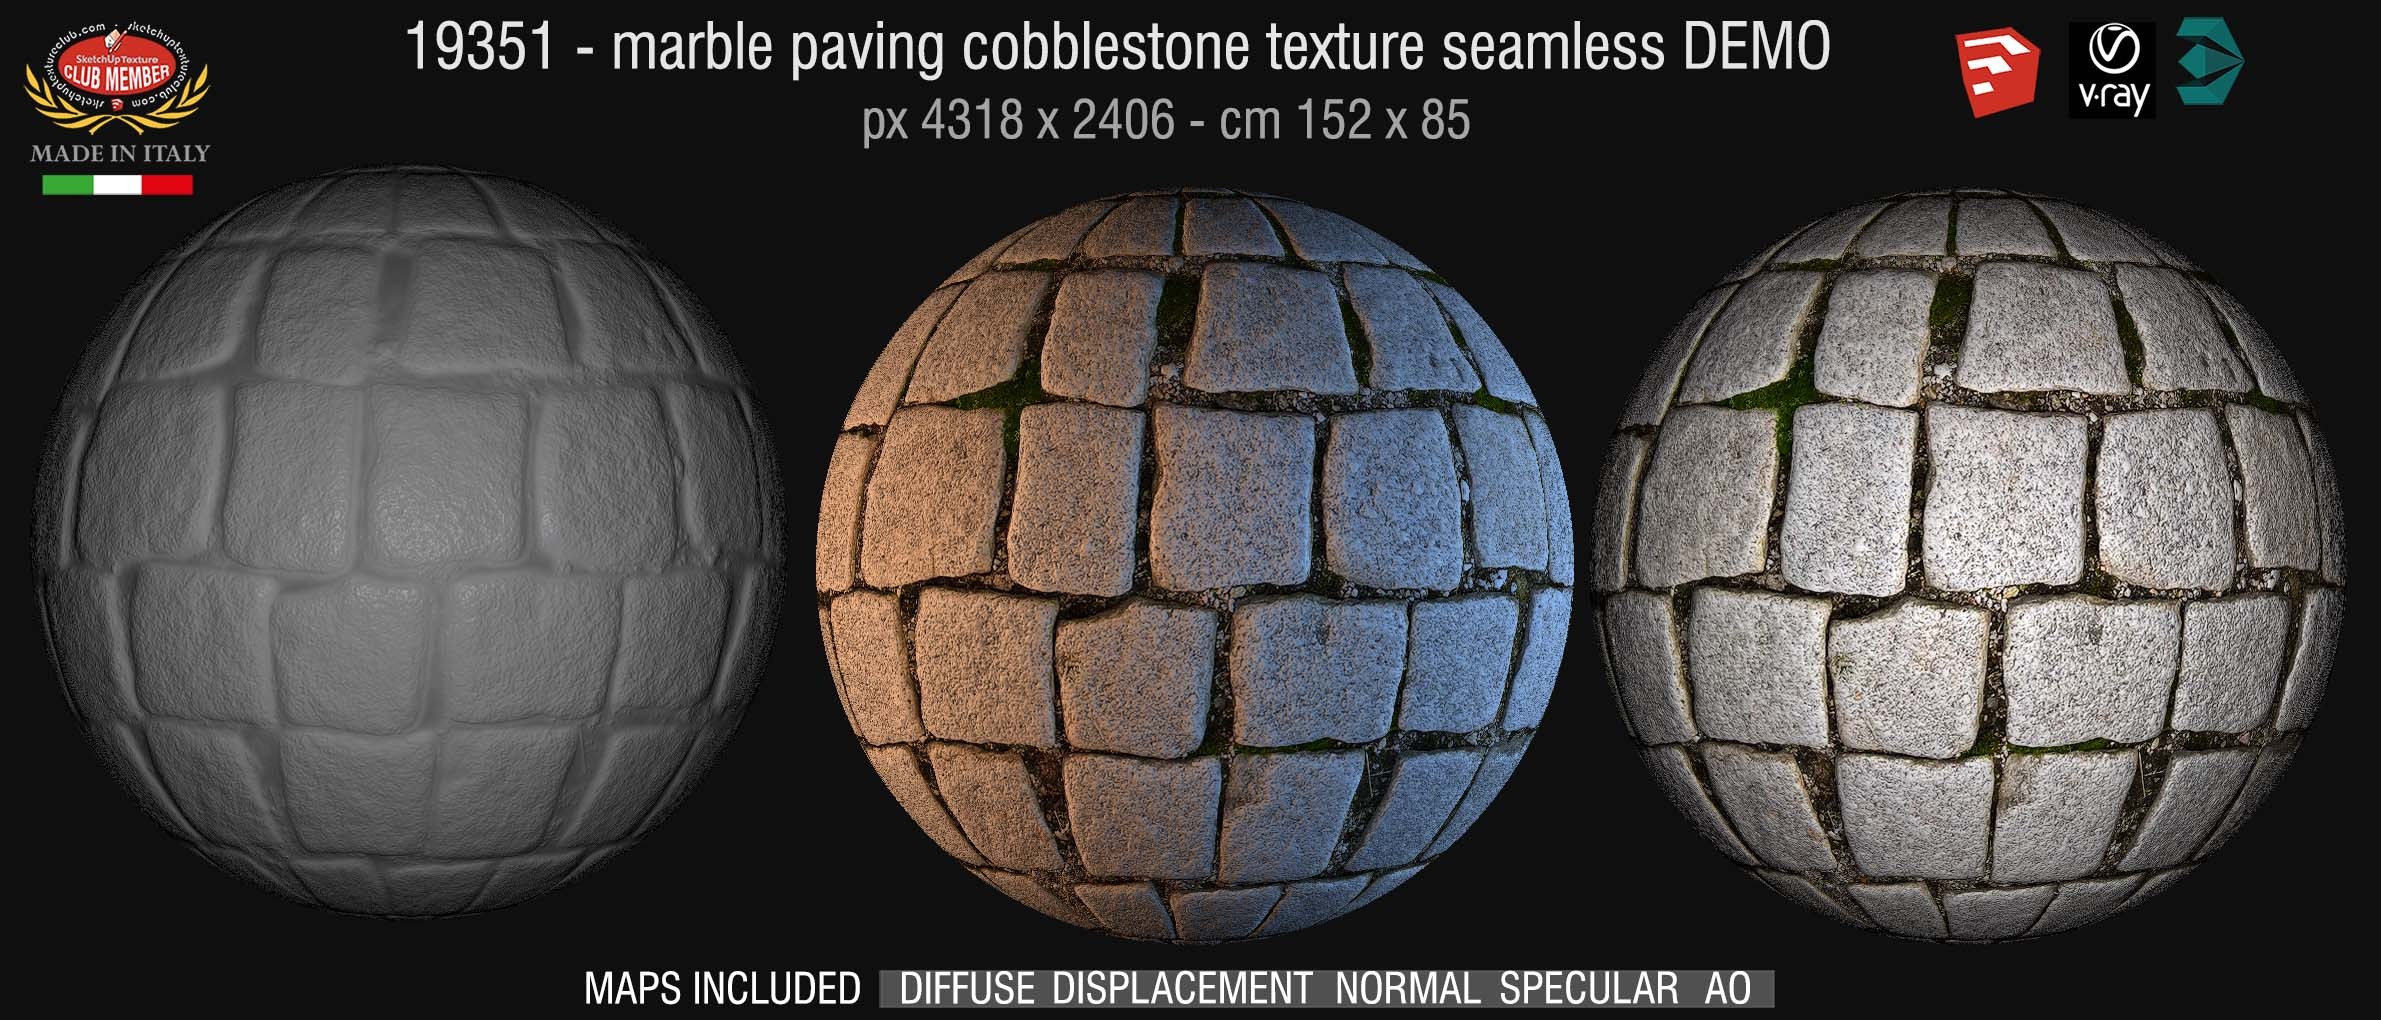 19351 HR Street paving cobblestone texture + maps DEMO